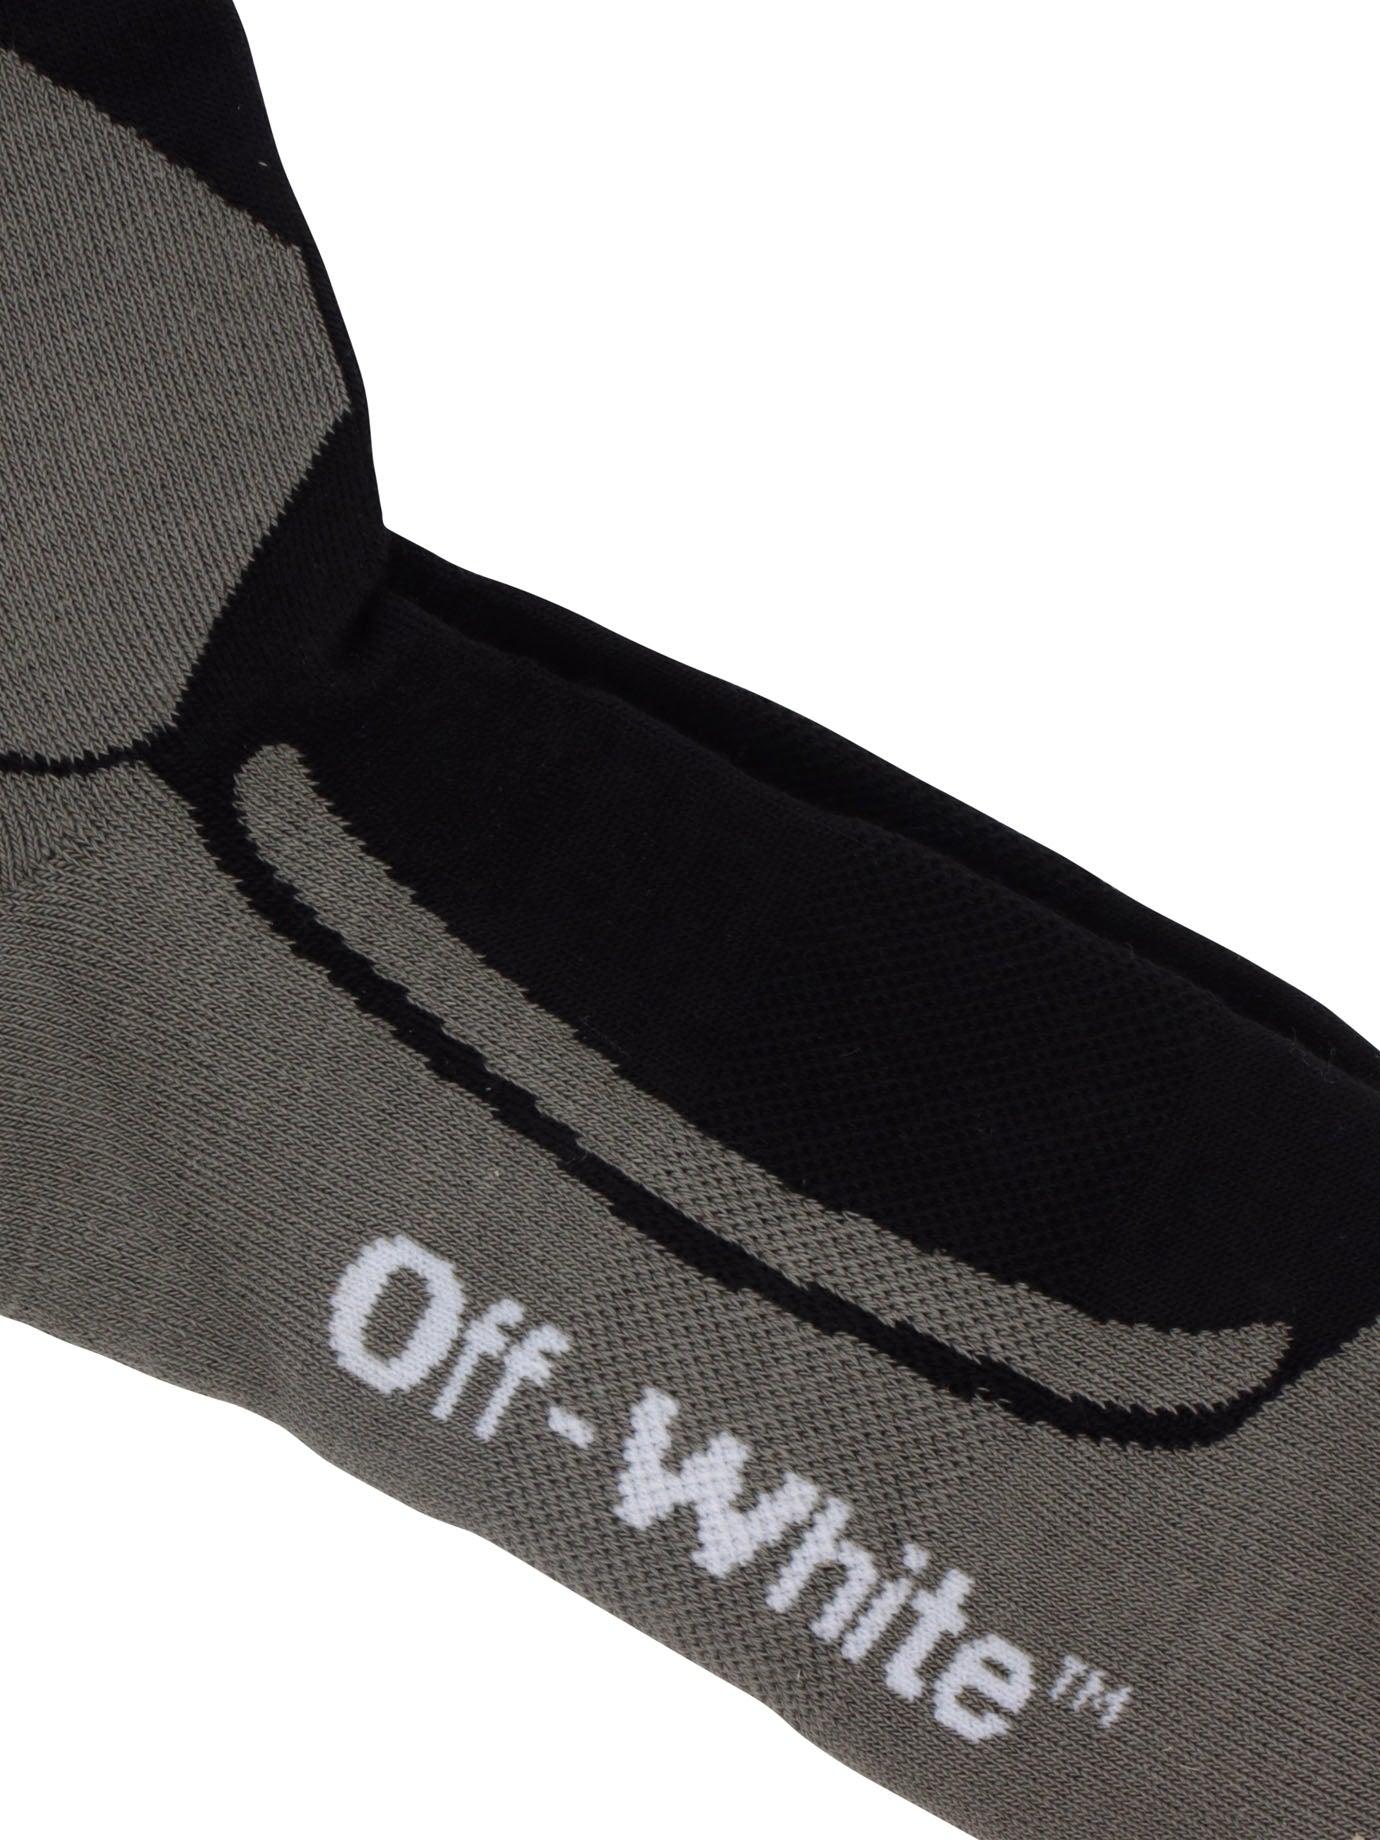 Off-White c/o Virgil Abloh bounce Ski Socks in Black for Men